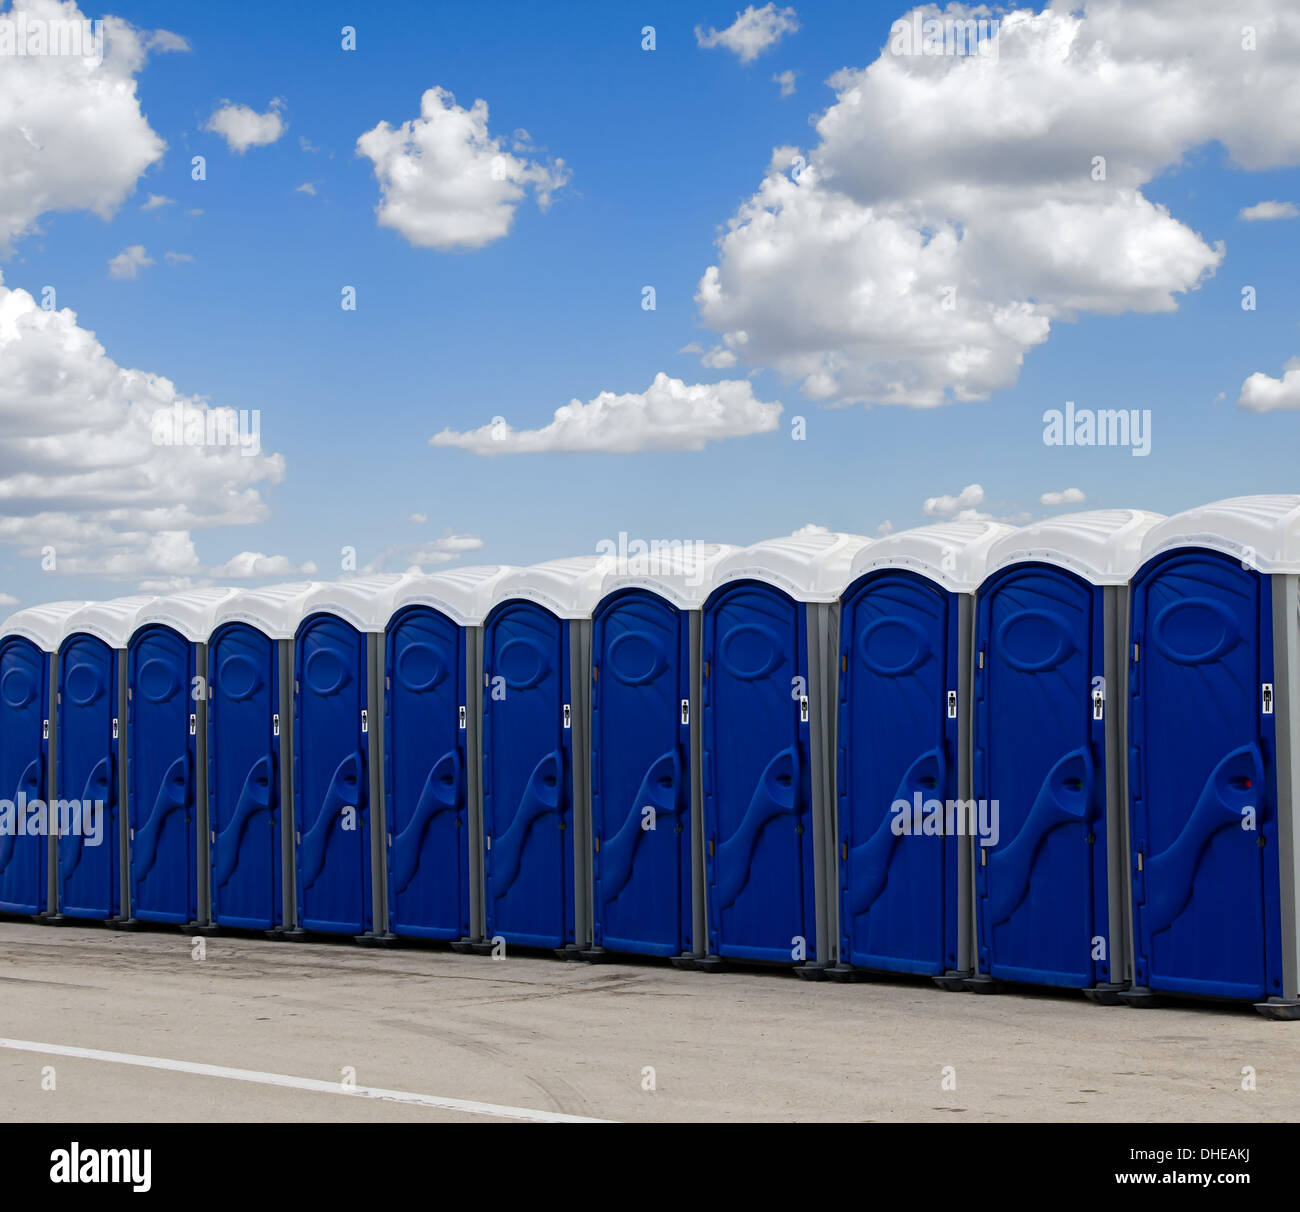 A row of blue portable toilets Stock Photo